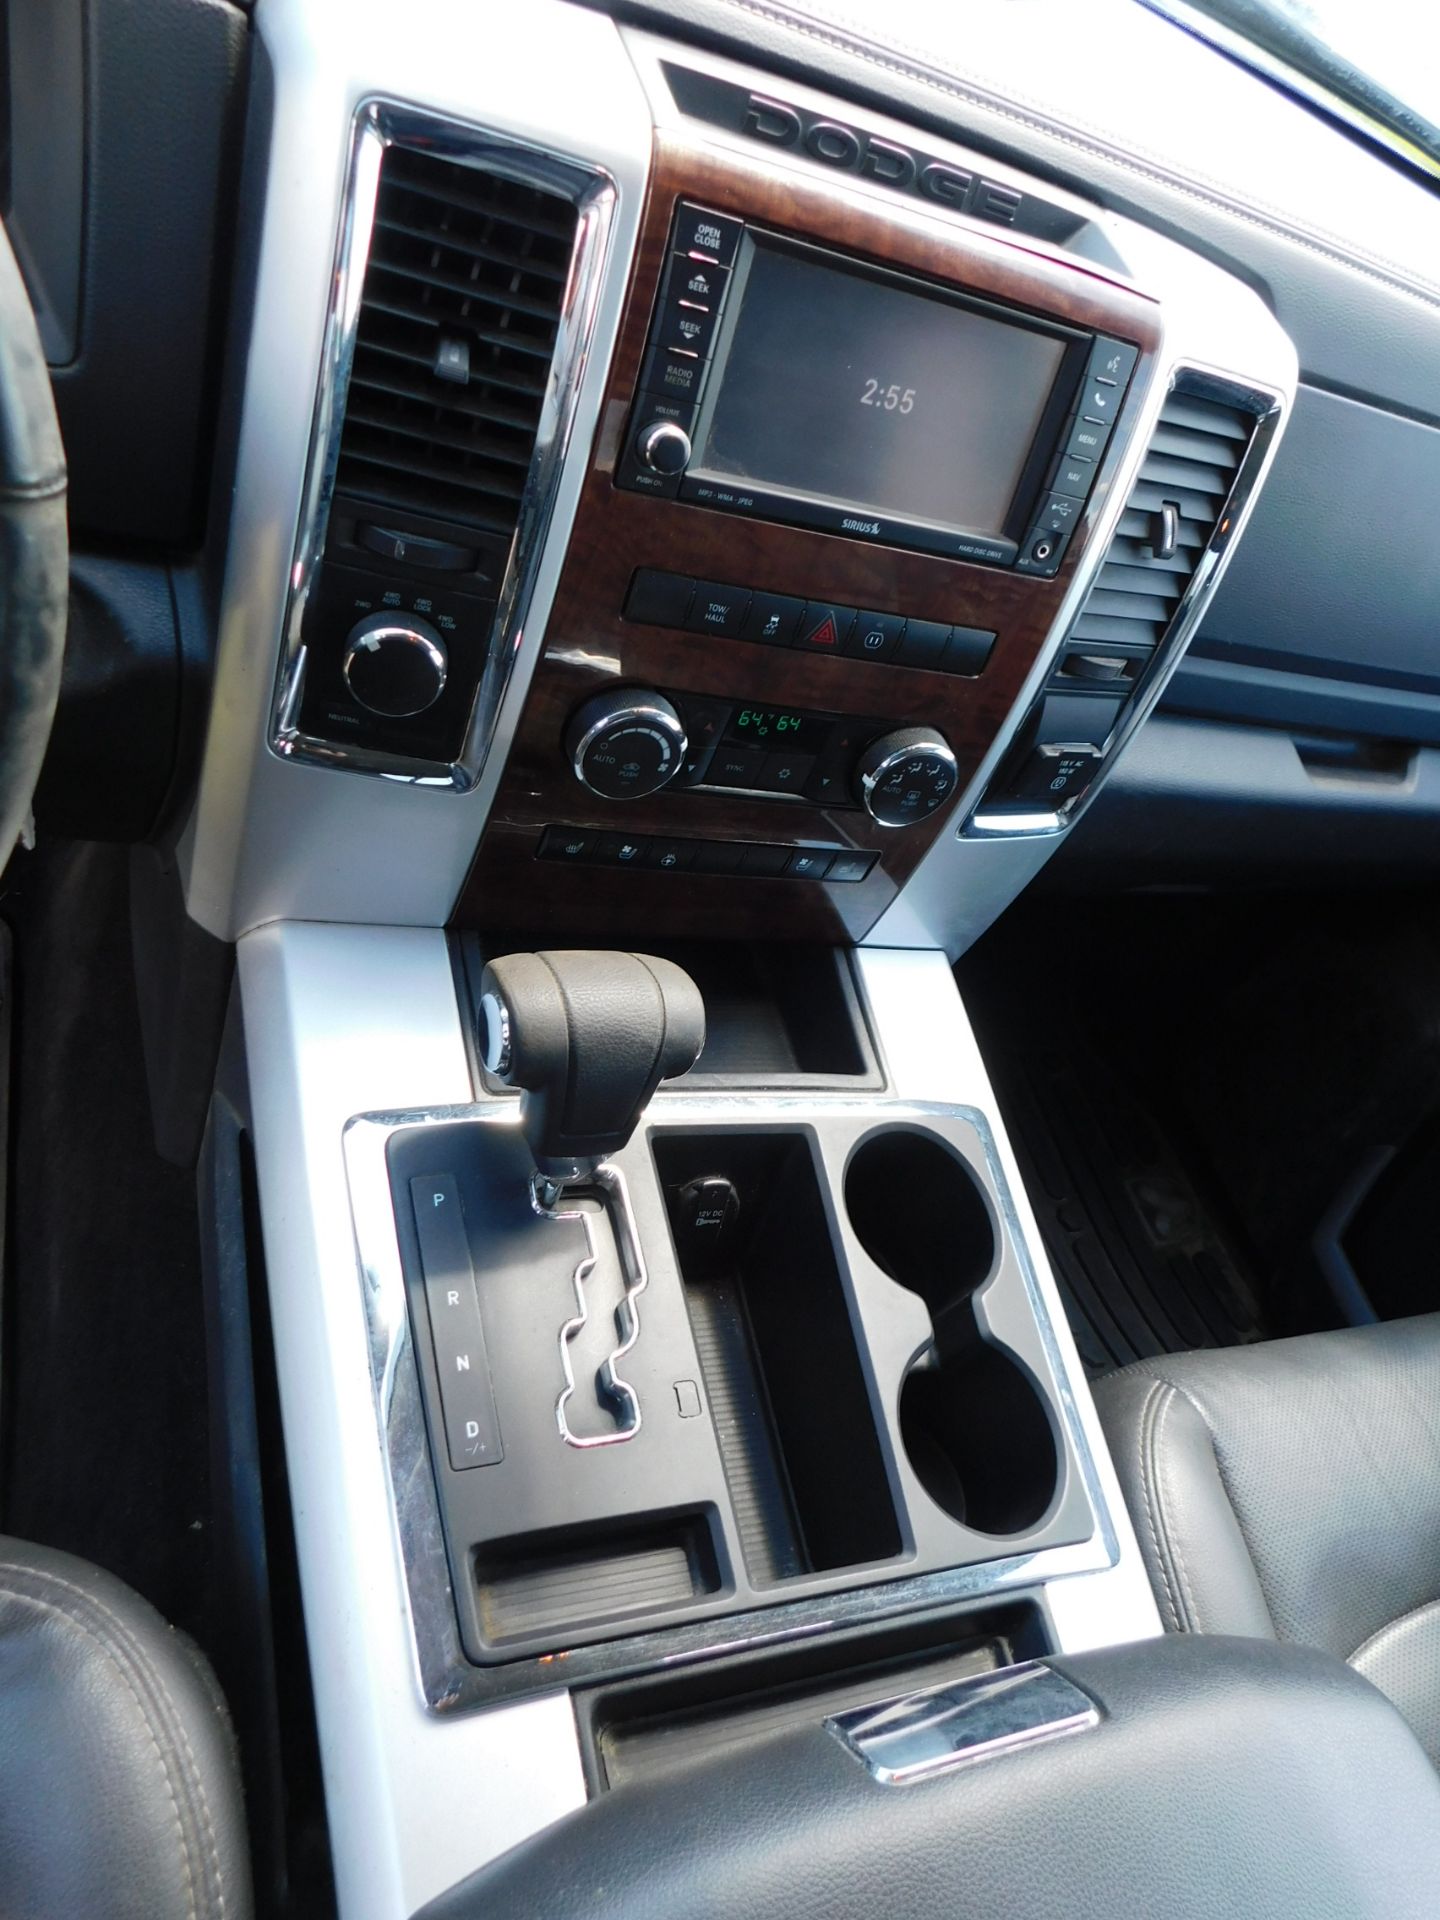 2012 Dodge Ram 1500 Pickup, Crew Cab, 6' Bed, Automatic, 4 WD, AM/FM,AC, PL, PW, Hemi 5.7 L - Image 29 of 53